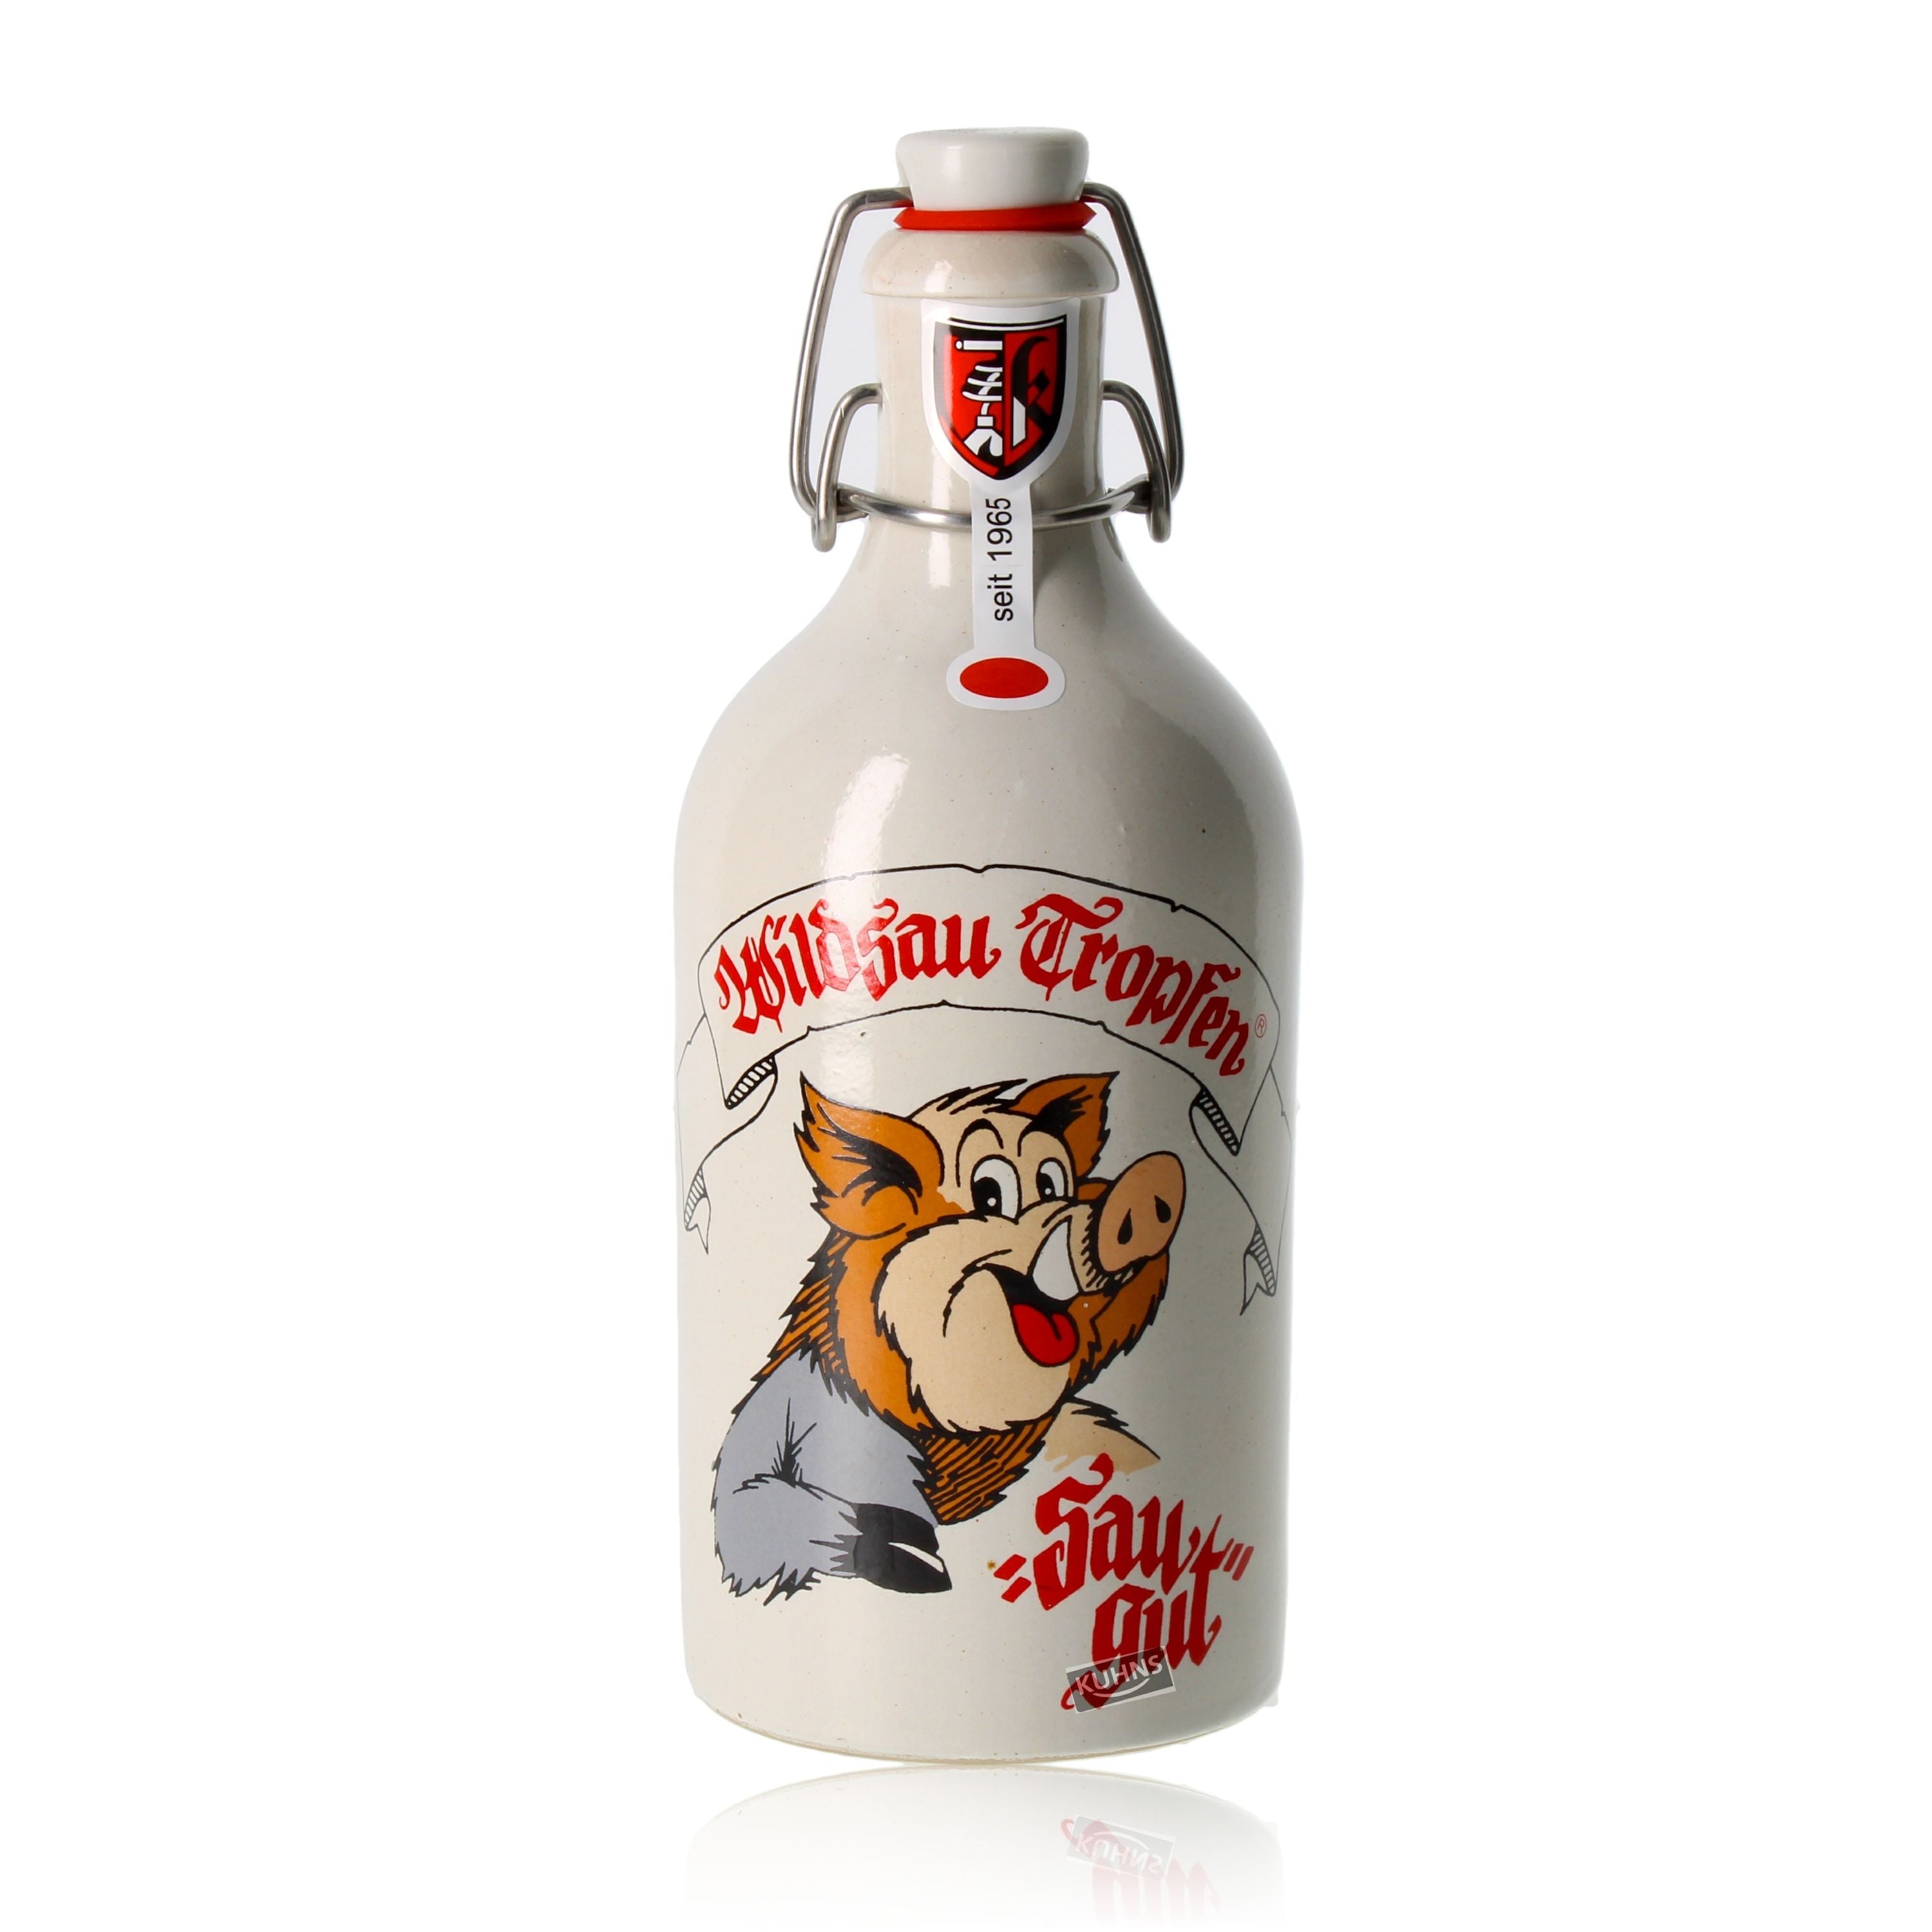 Spessart robber wild boar drops ceramic jug 0.5l, alc. 35% by volume, raspberry spirit from Germany